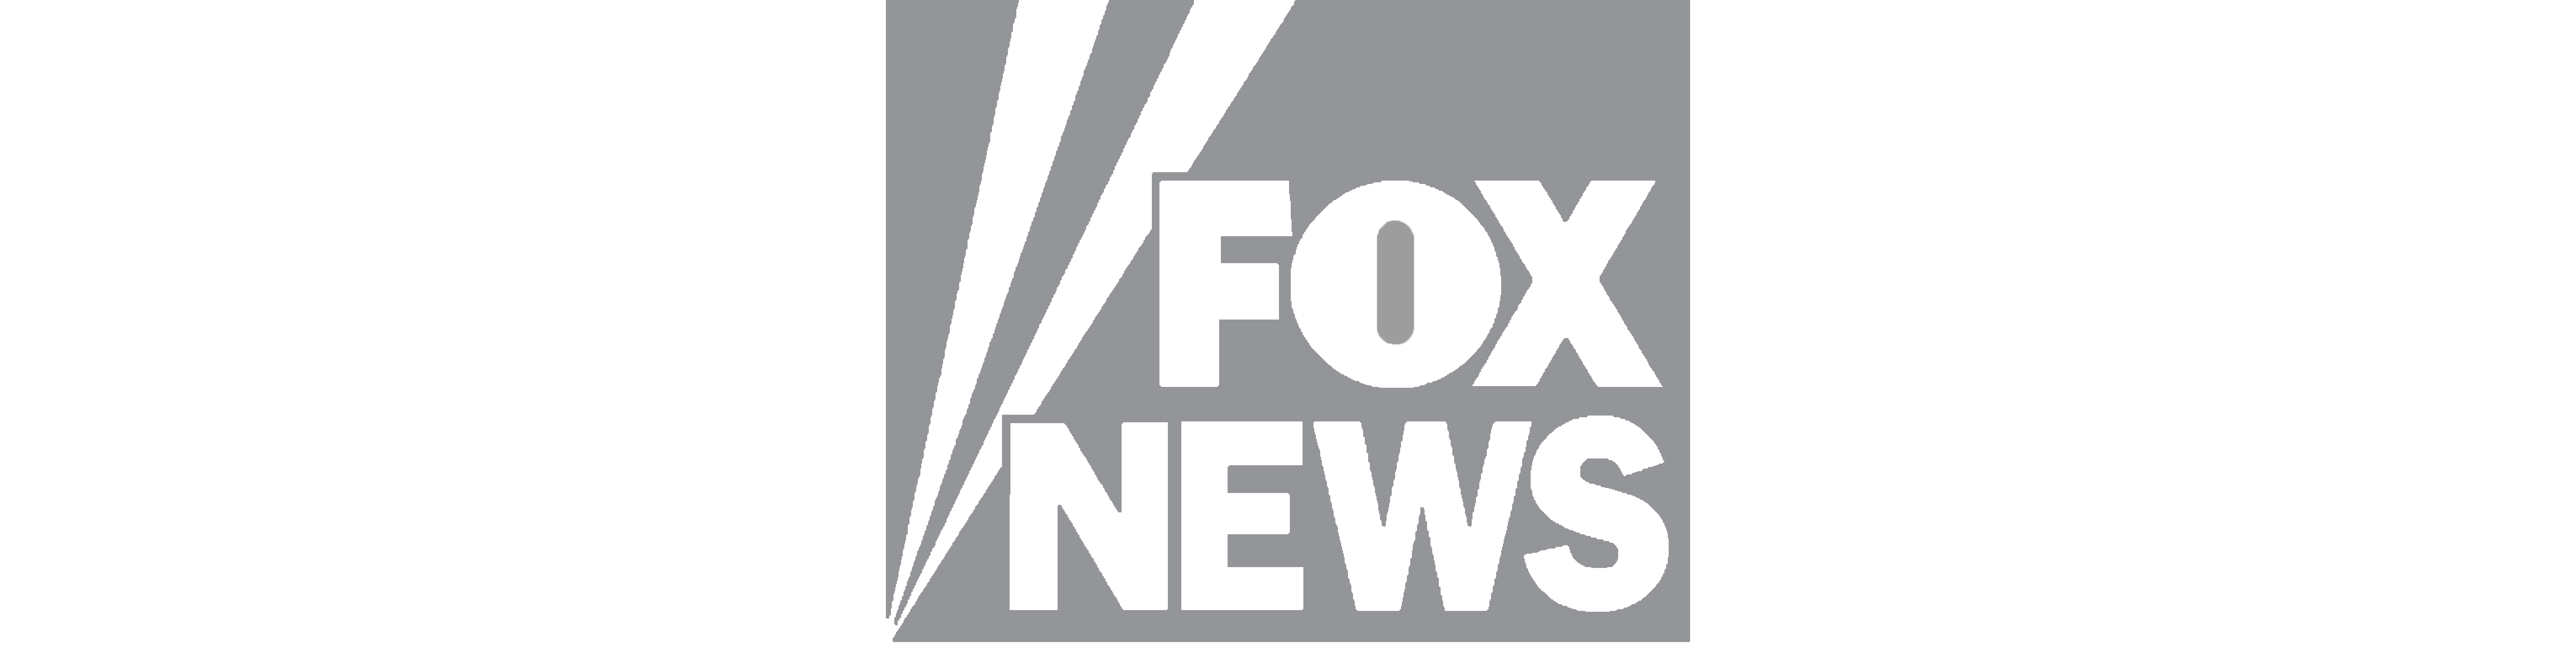 fox news magazine png logo #4362